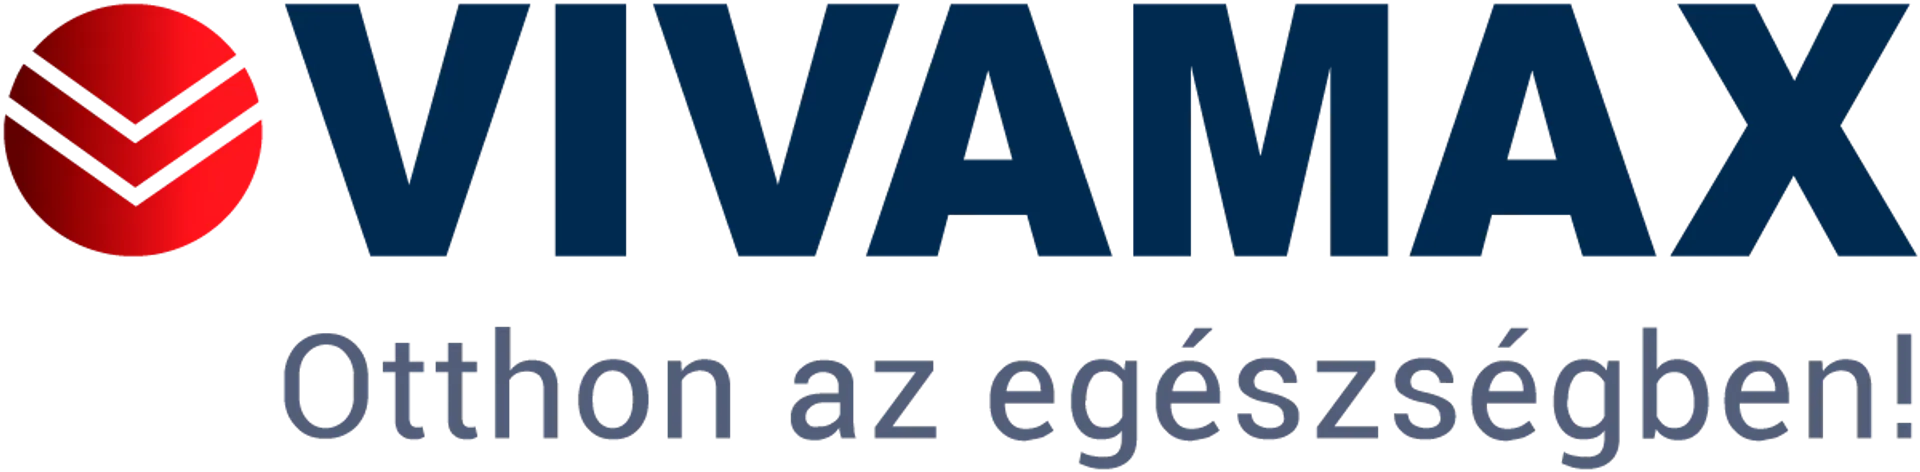 VIVAMAX logo